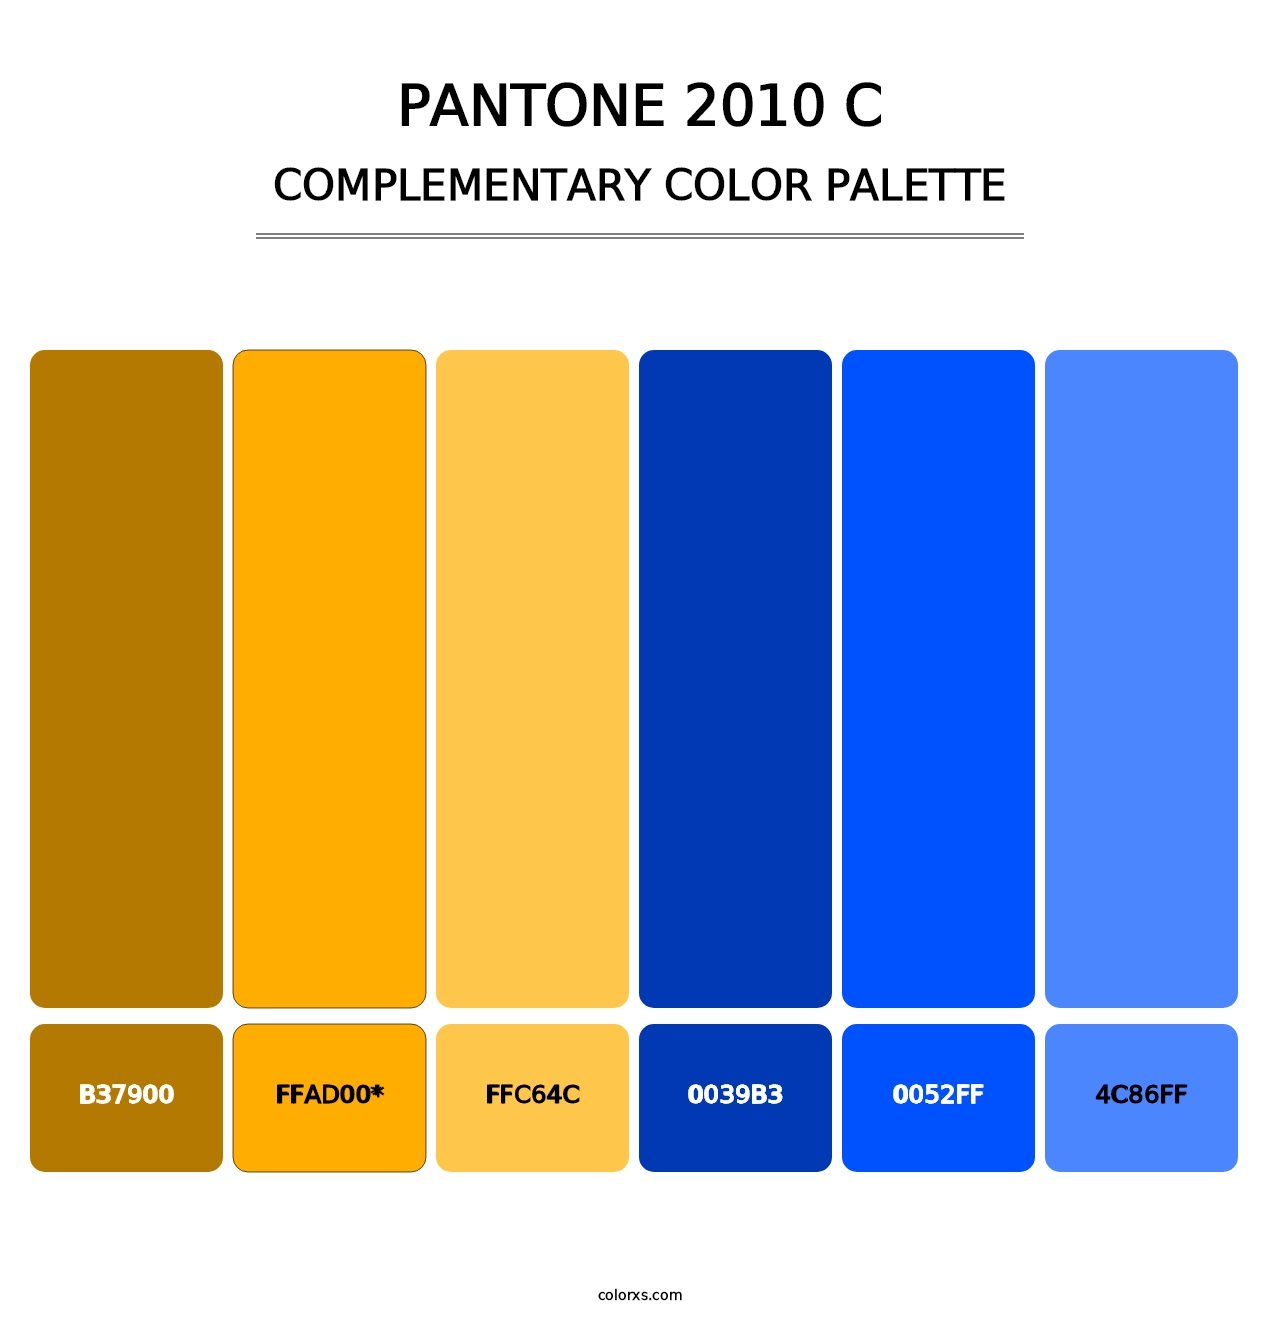 PANTONE 2010 C - Complementary Color Palette